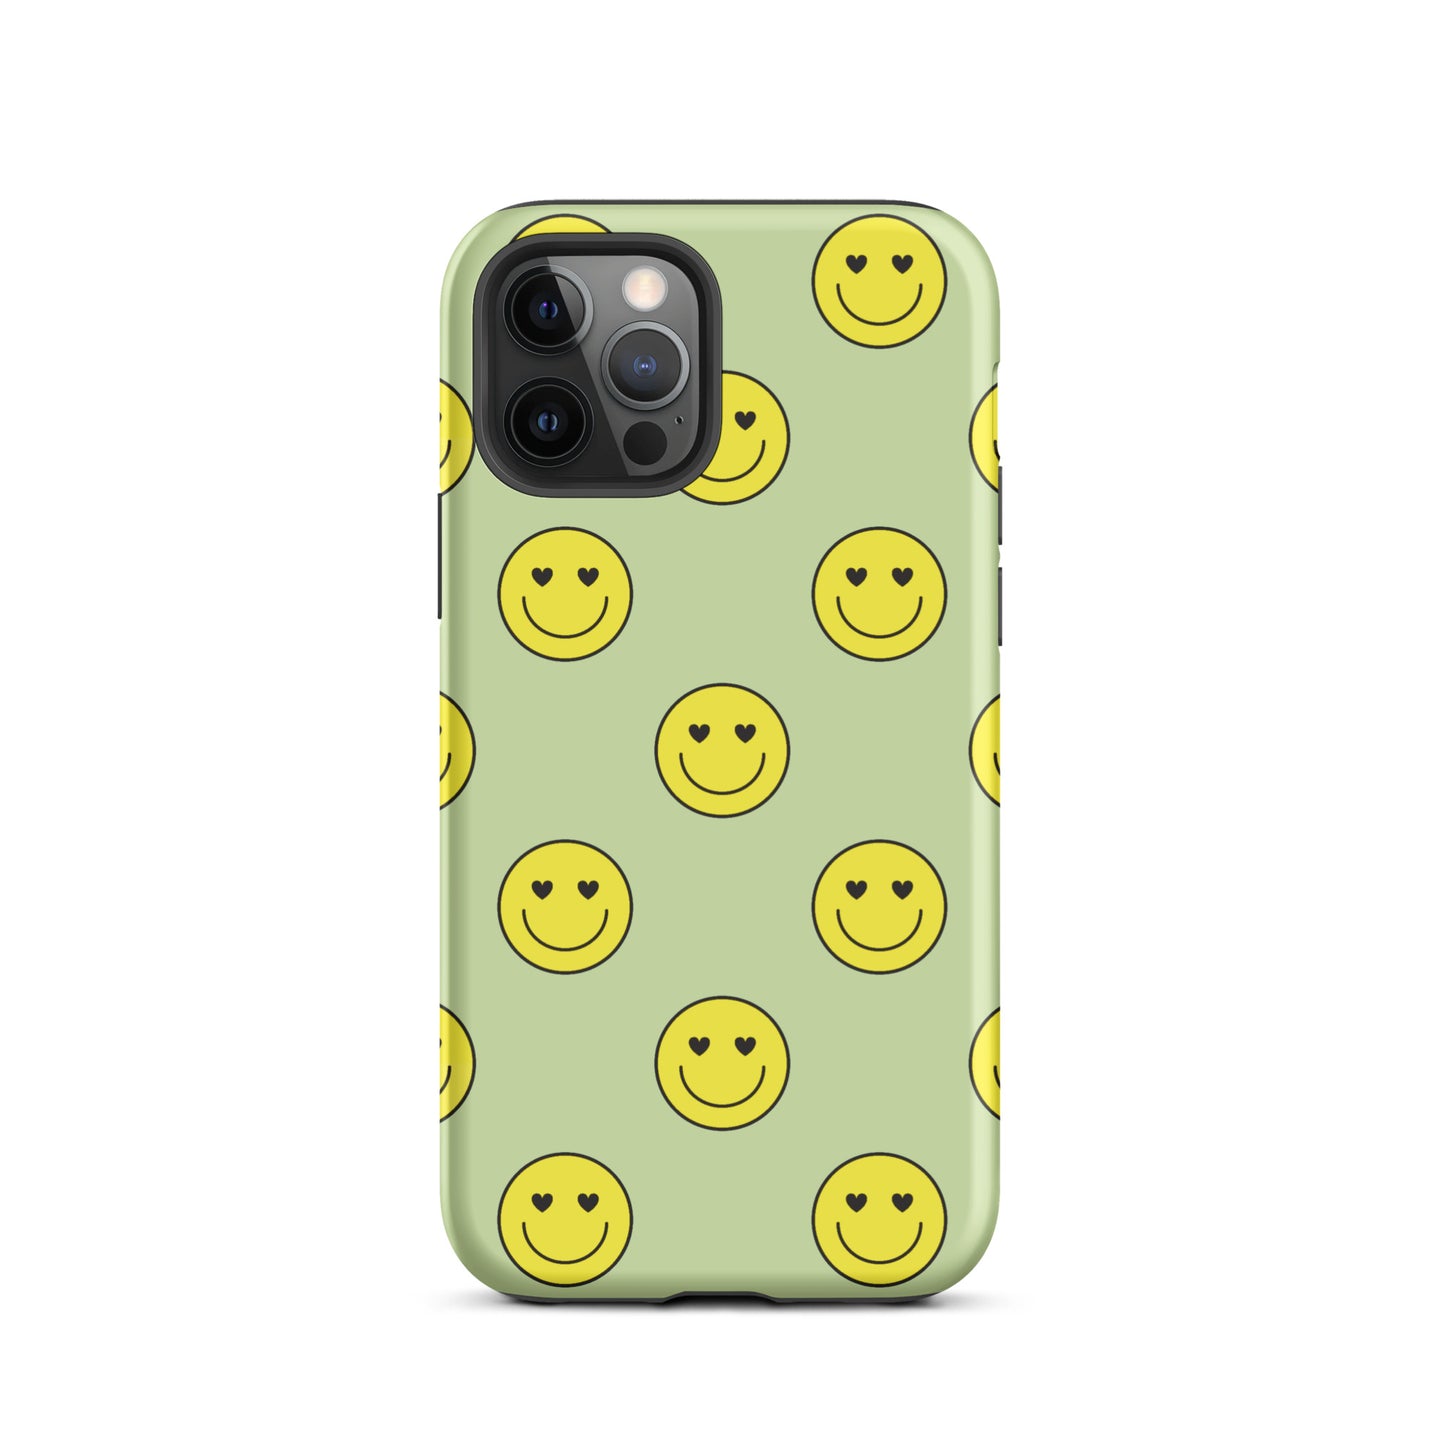 Neon Smiley Faces iPhone Case iPhone 12 Pro Matte